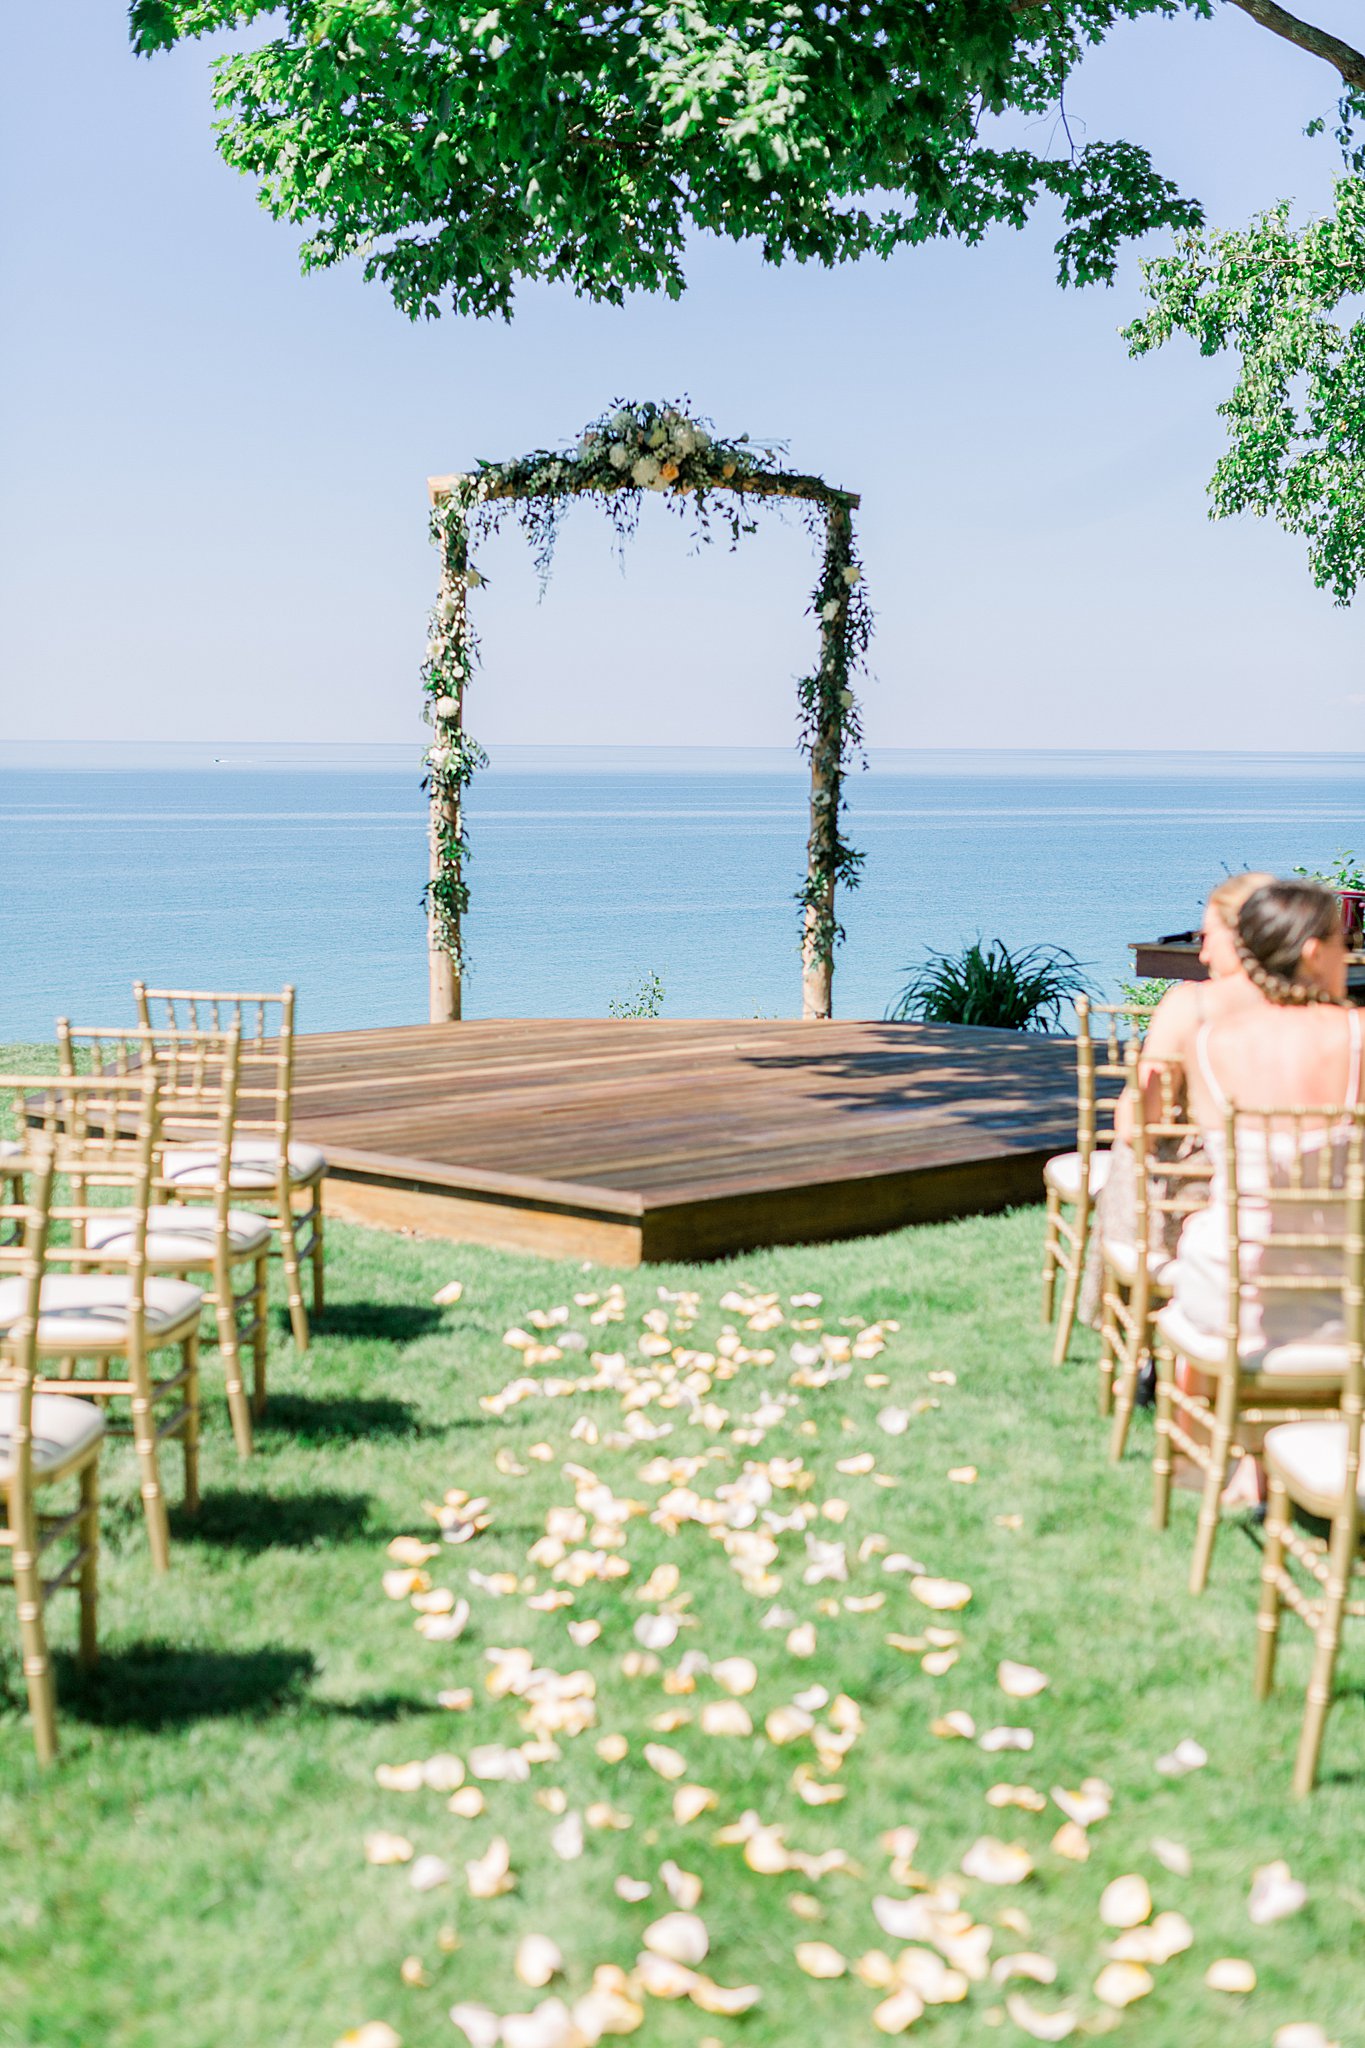 Ceremony arch for intimate Lake Michigan wedding ceremony.